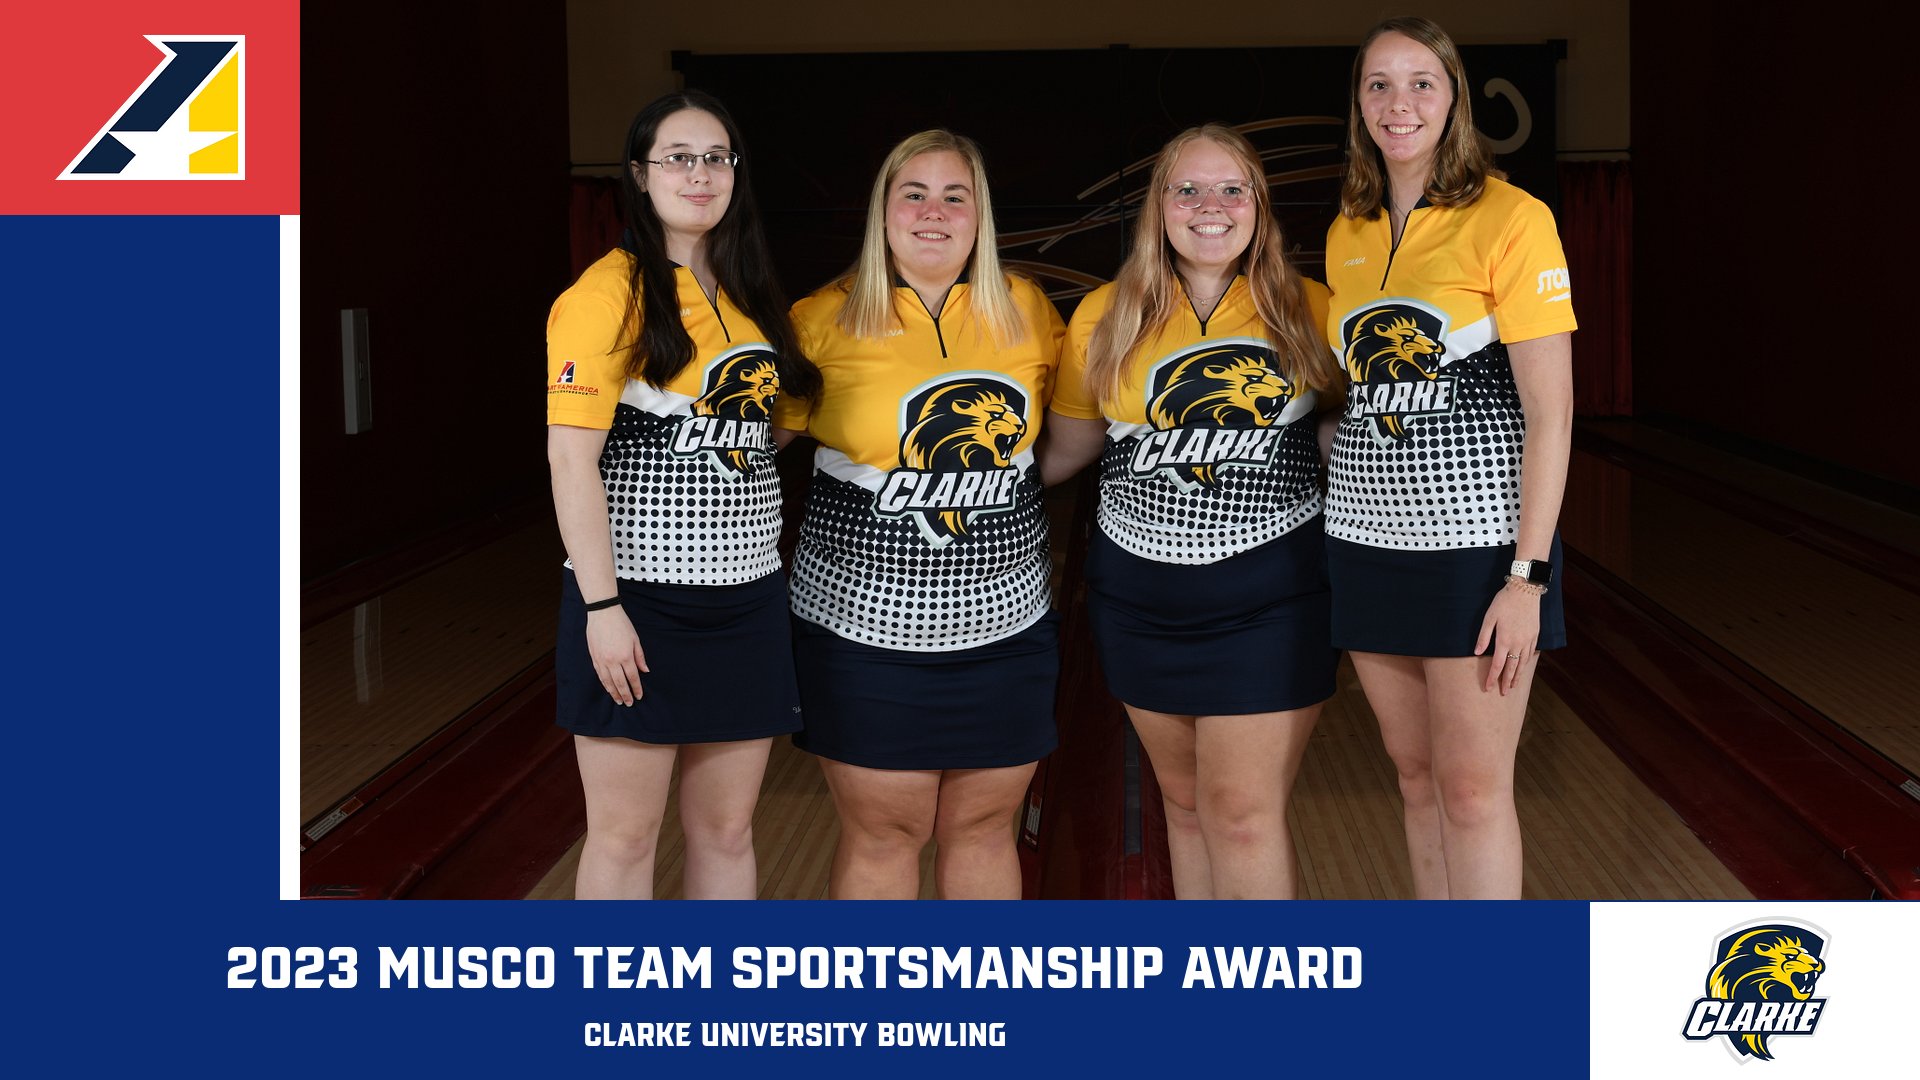 Clarke University Bowling Earns 2023 Musco Team Sportsmanship Award